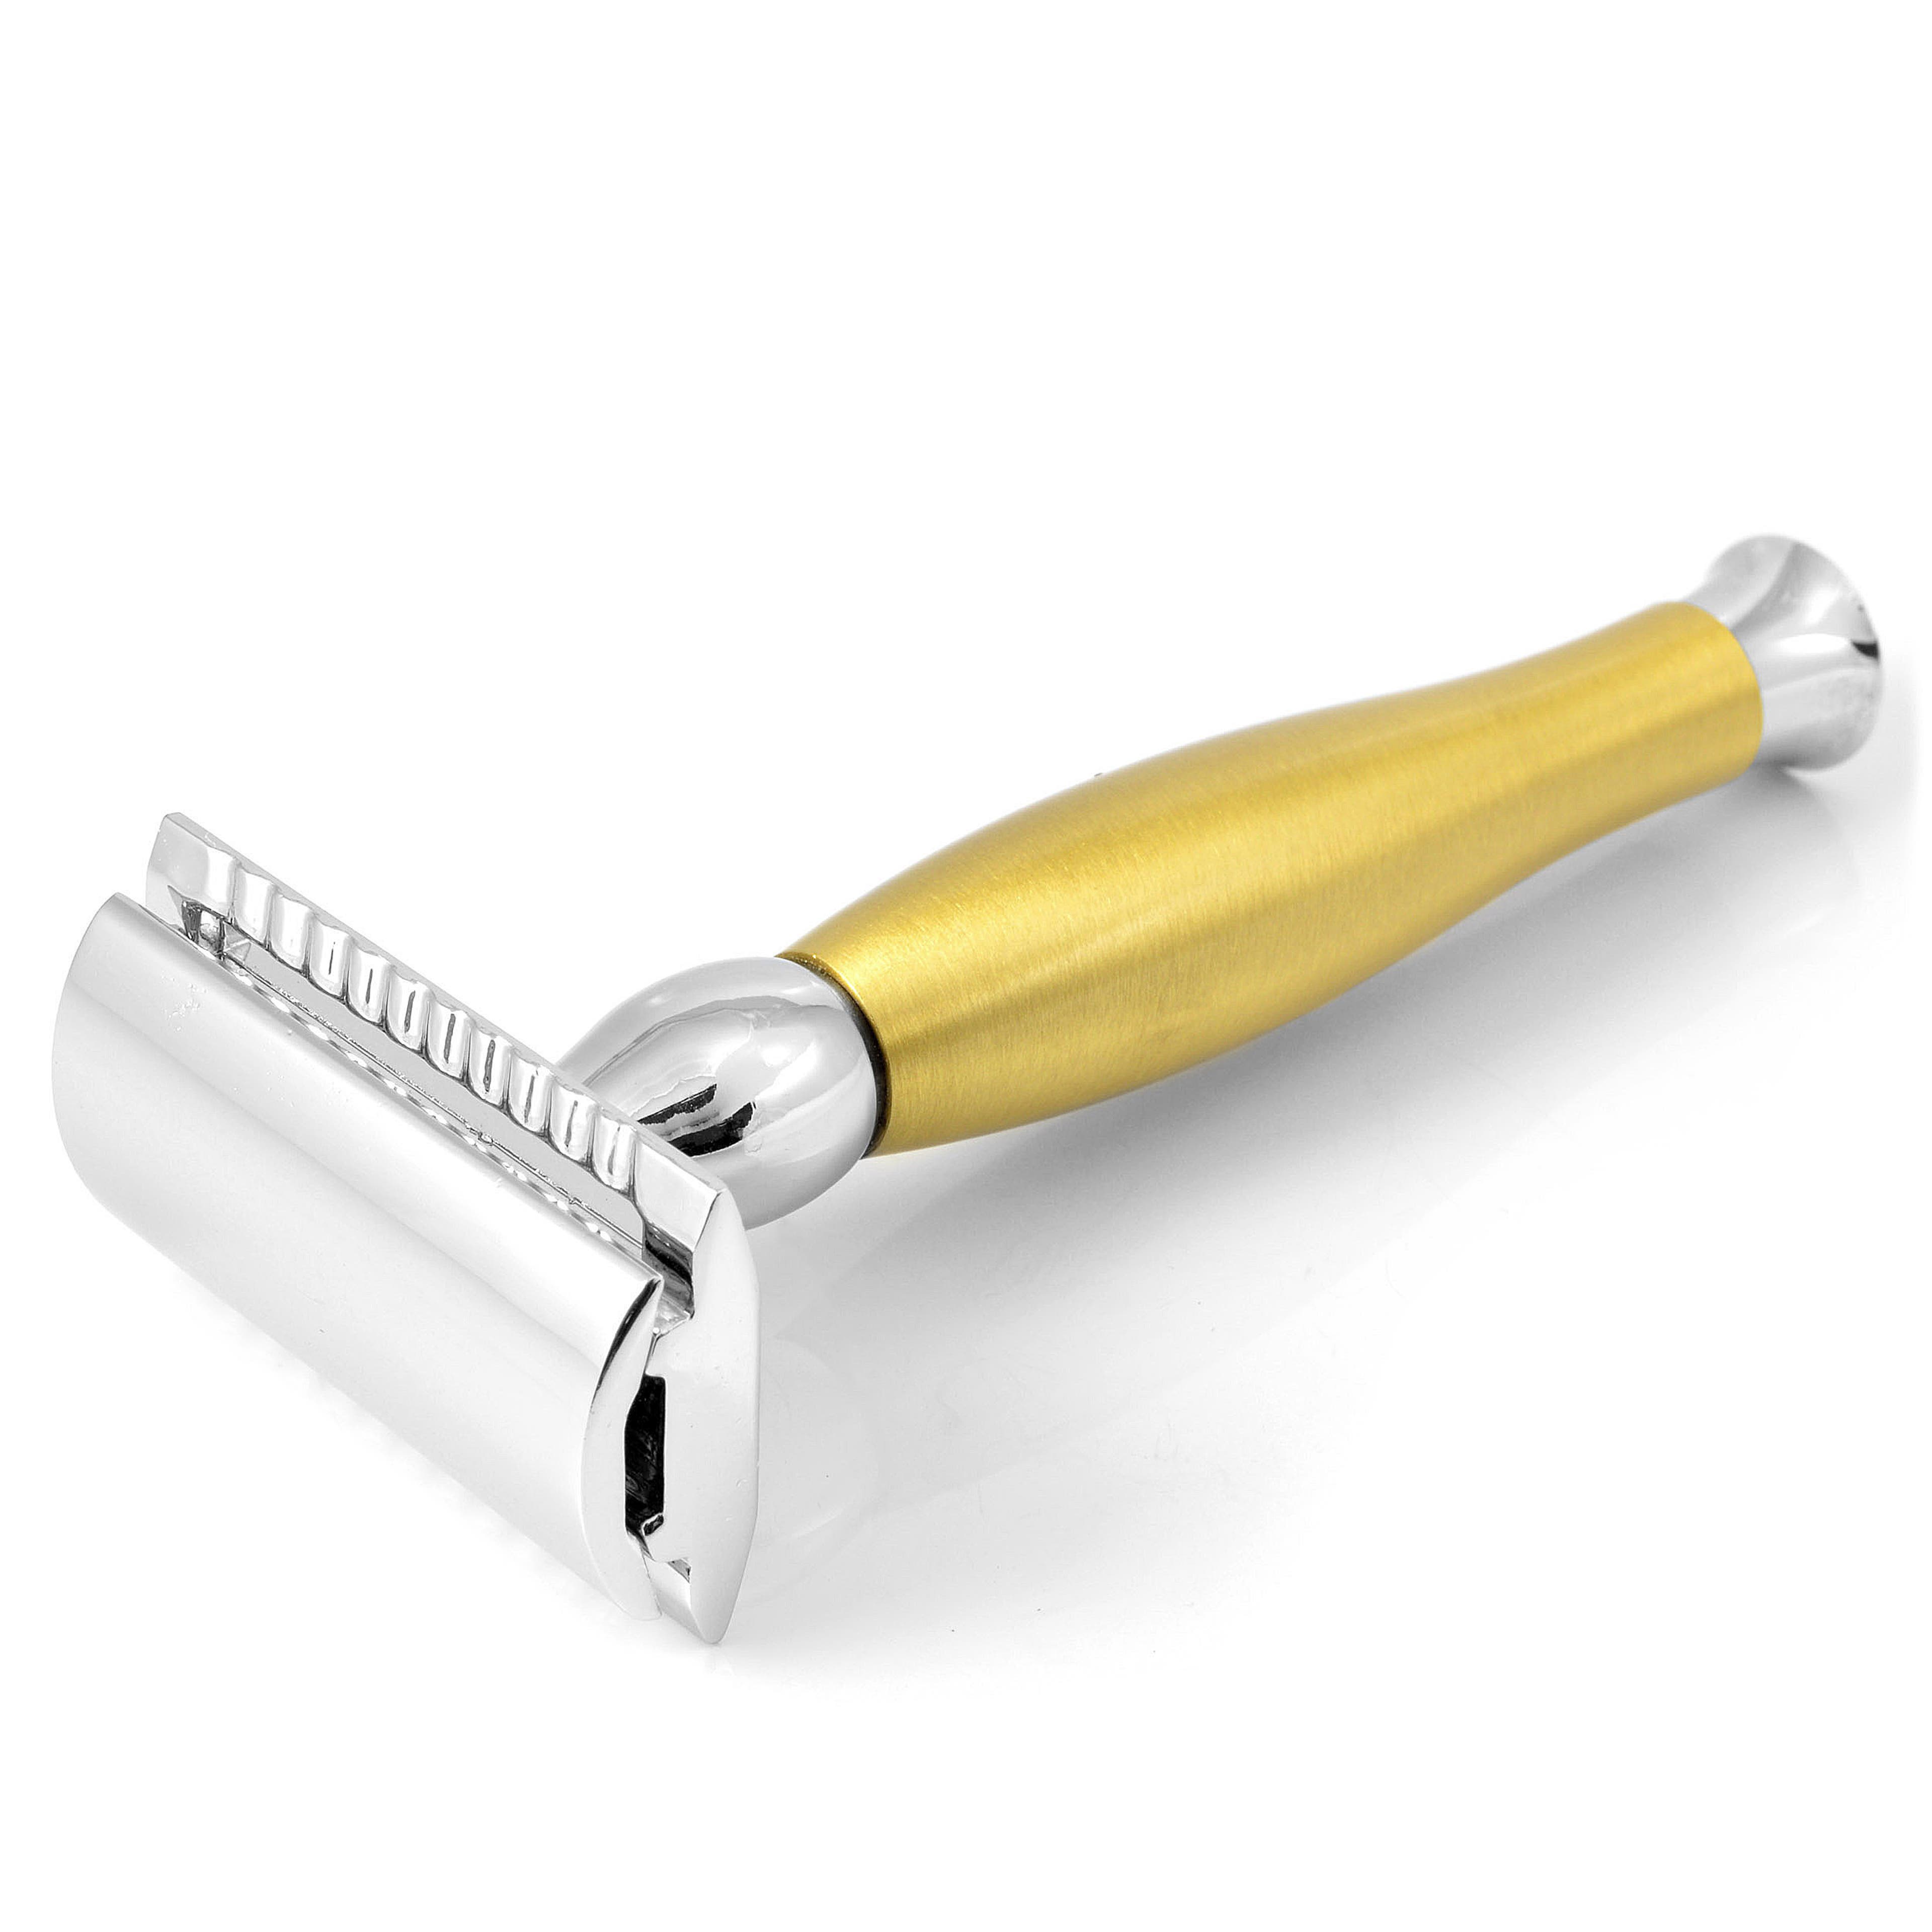 Maquinilla de afeitar dorada DE de acero inoxidable